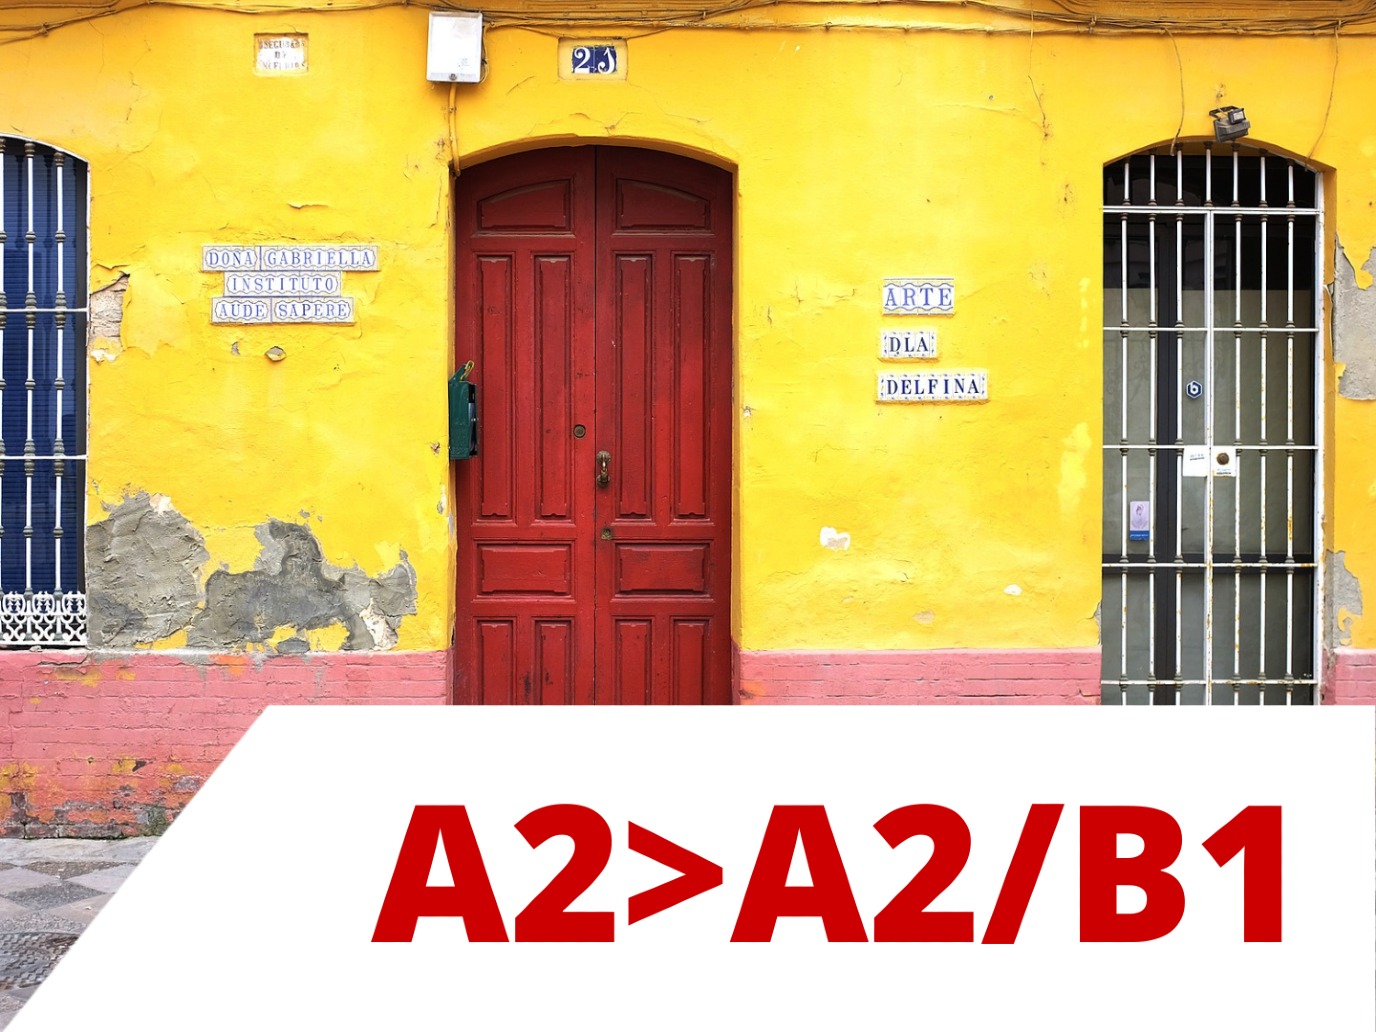 Spaans A2>A2/B1